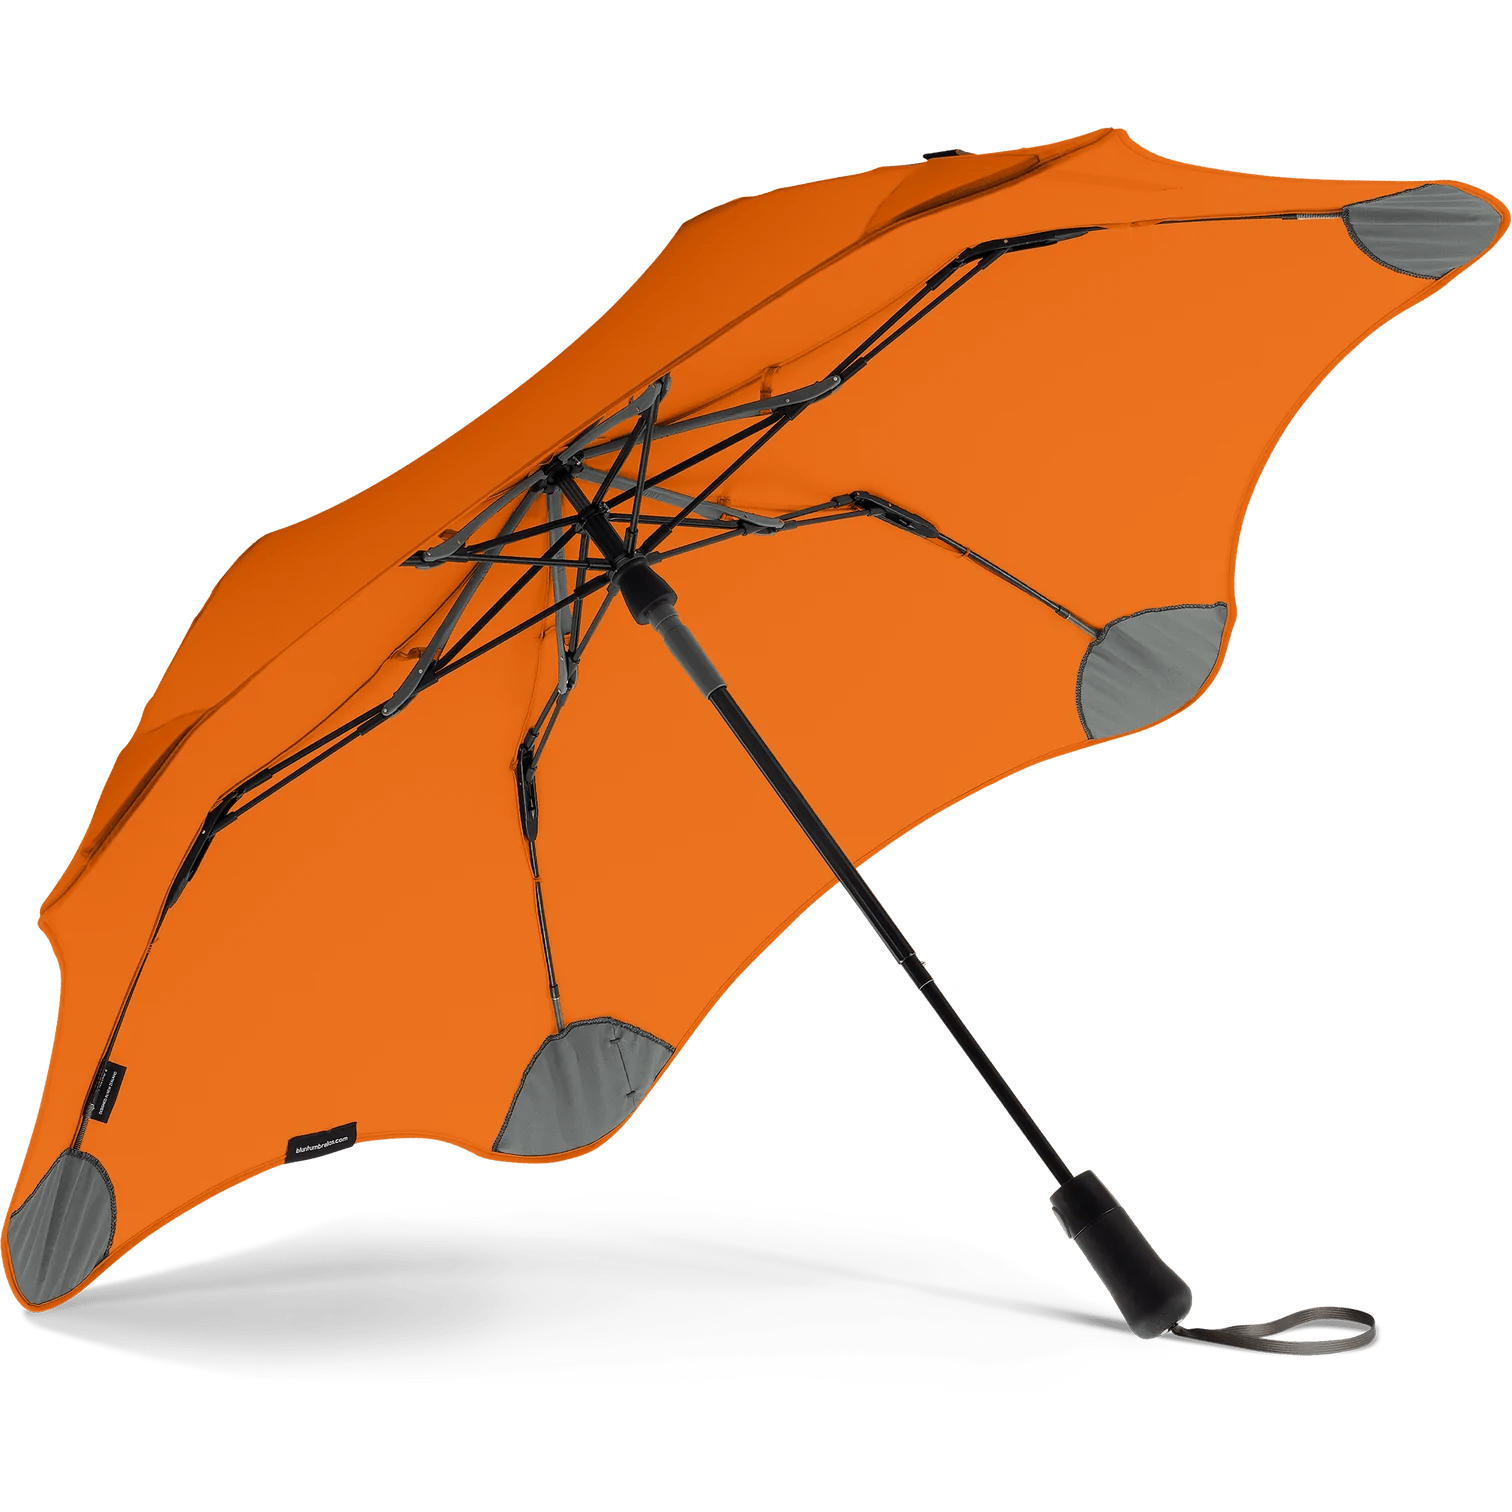 Blunt Metro Umbrella - My Filosophy